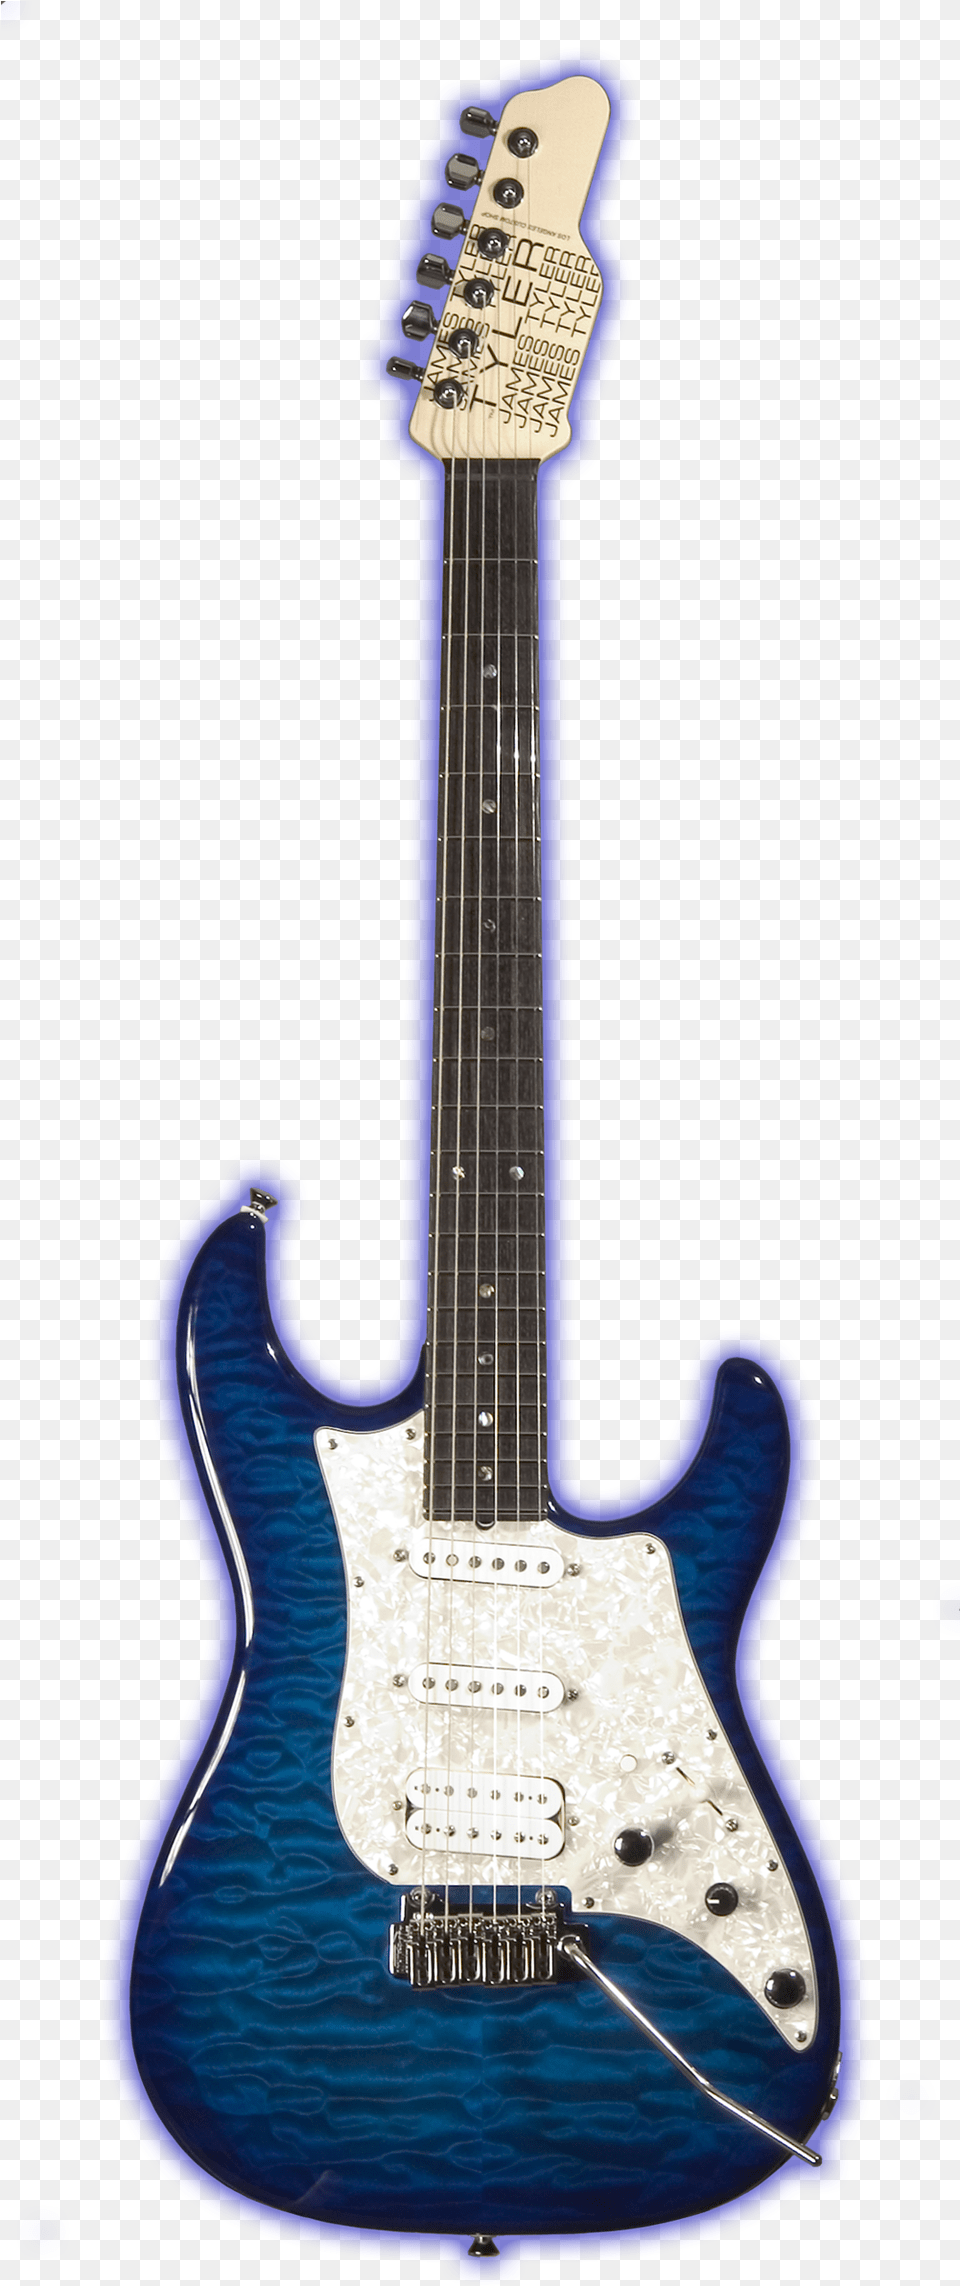 Blue Burst Electric Guitar, Electric Guitar, Musical Instrument, Bass Guitar Png